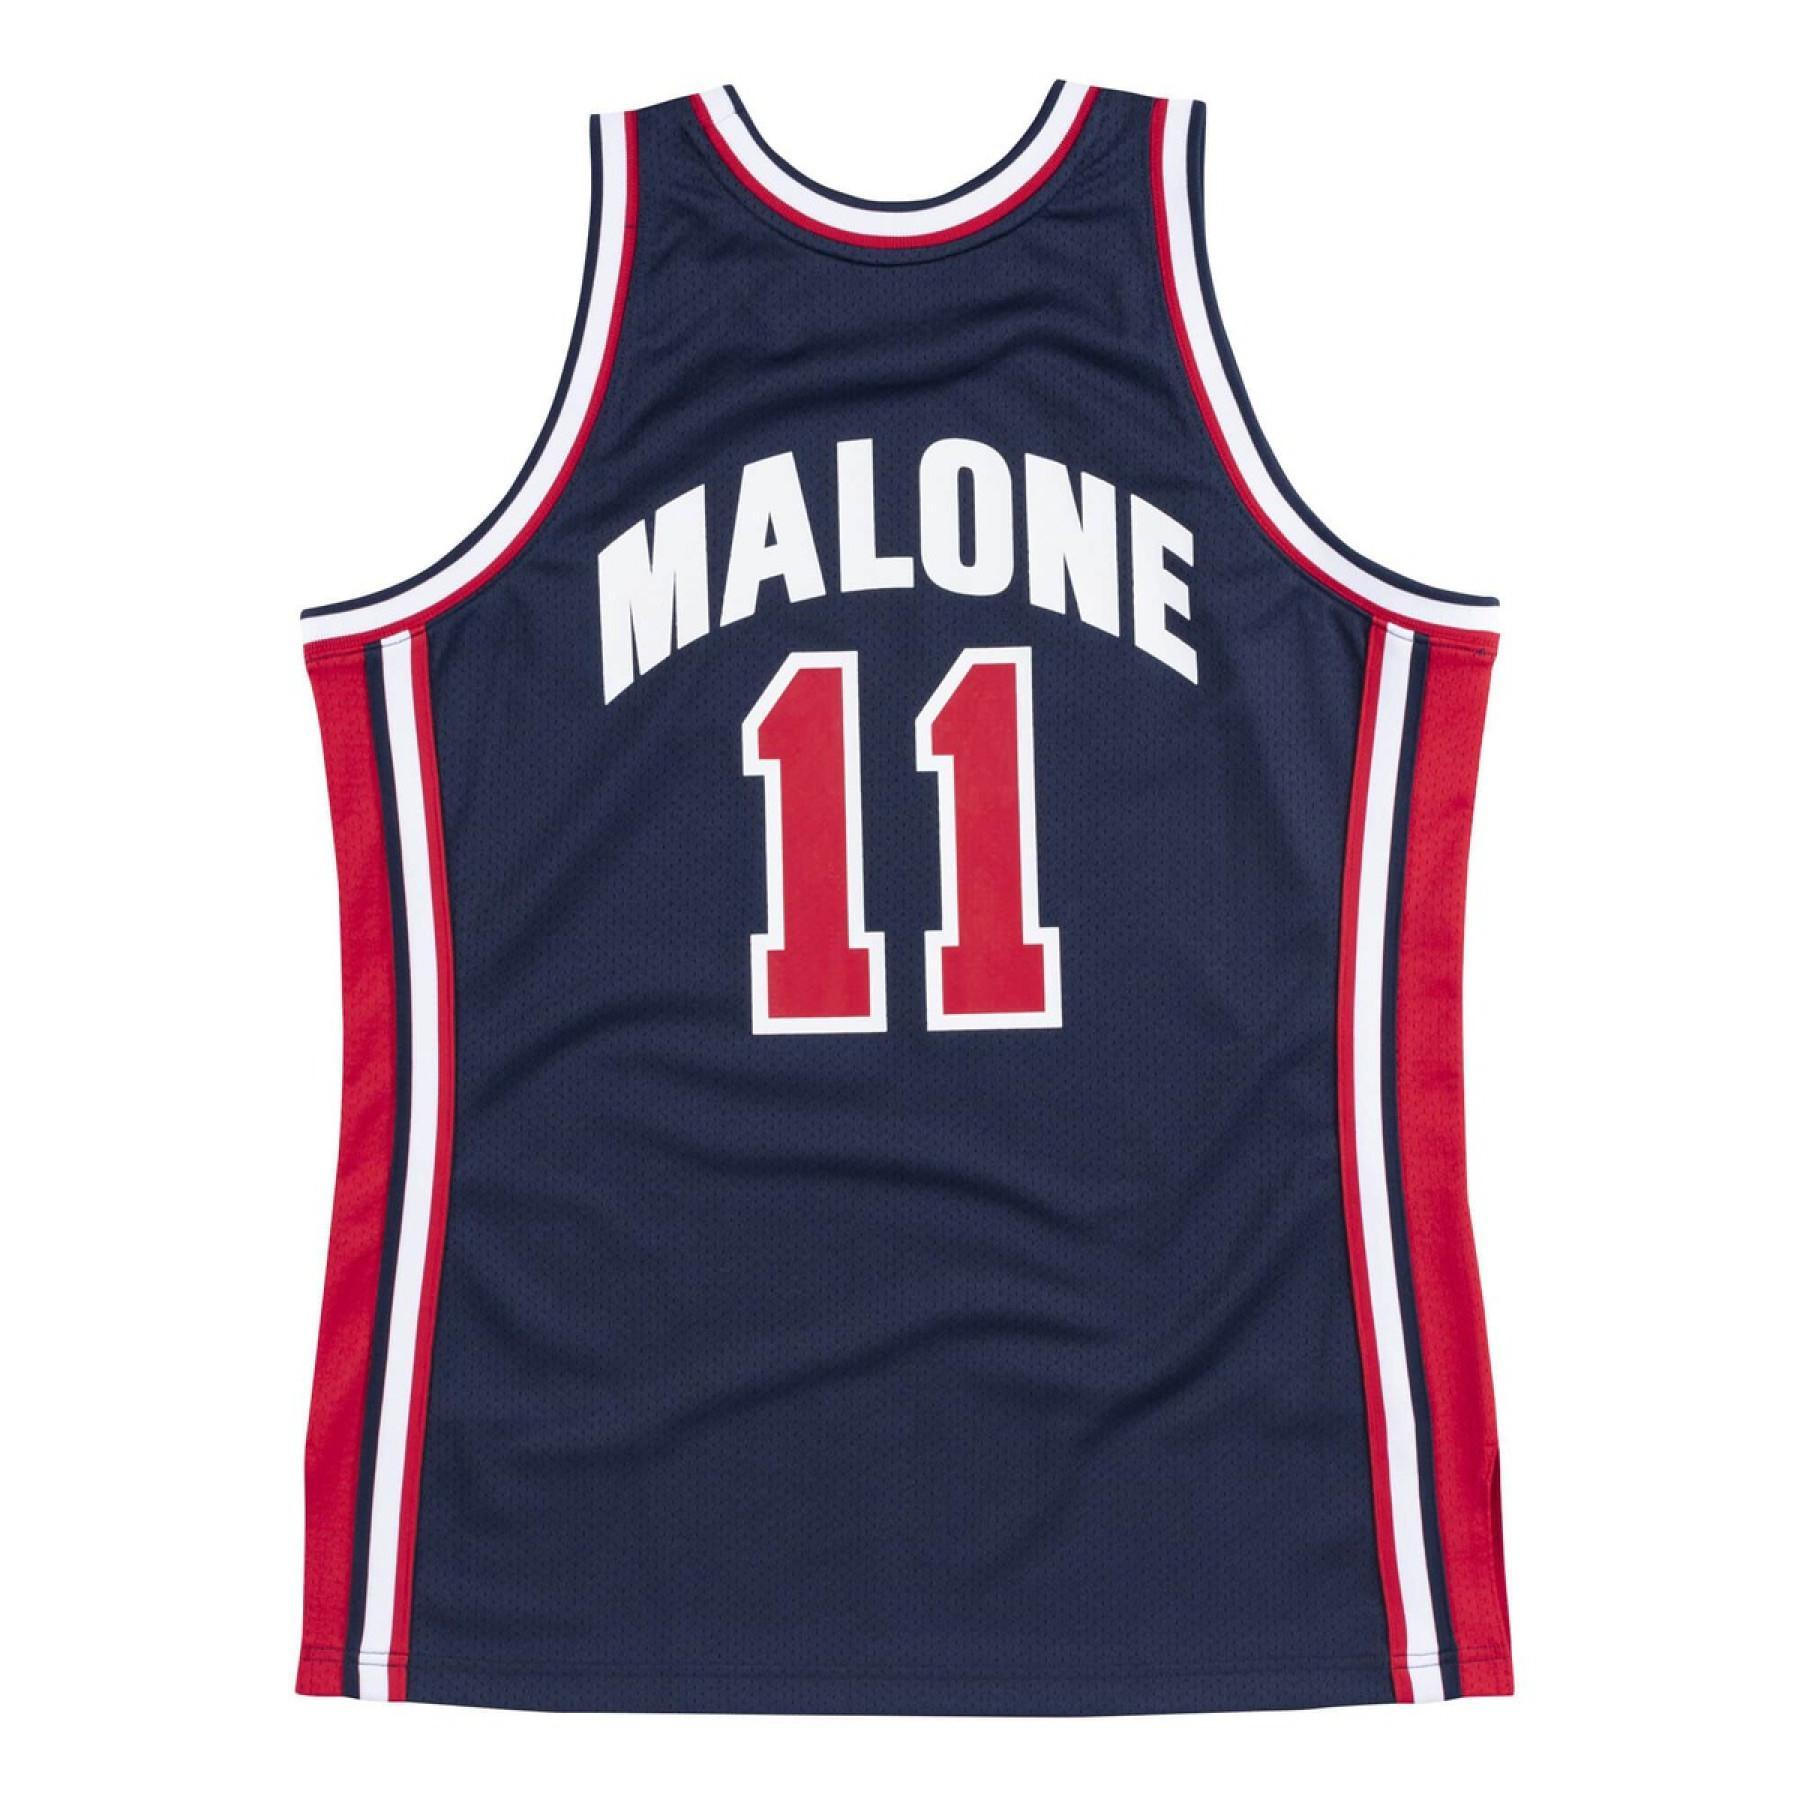 Authentic team jersey USA nba Karl Malone